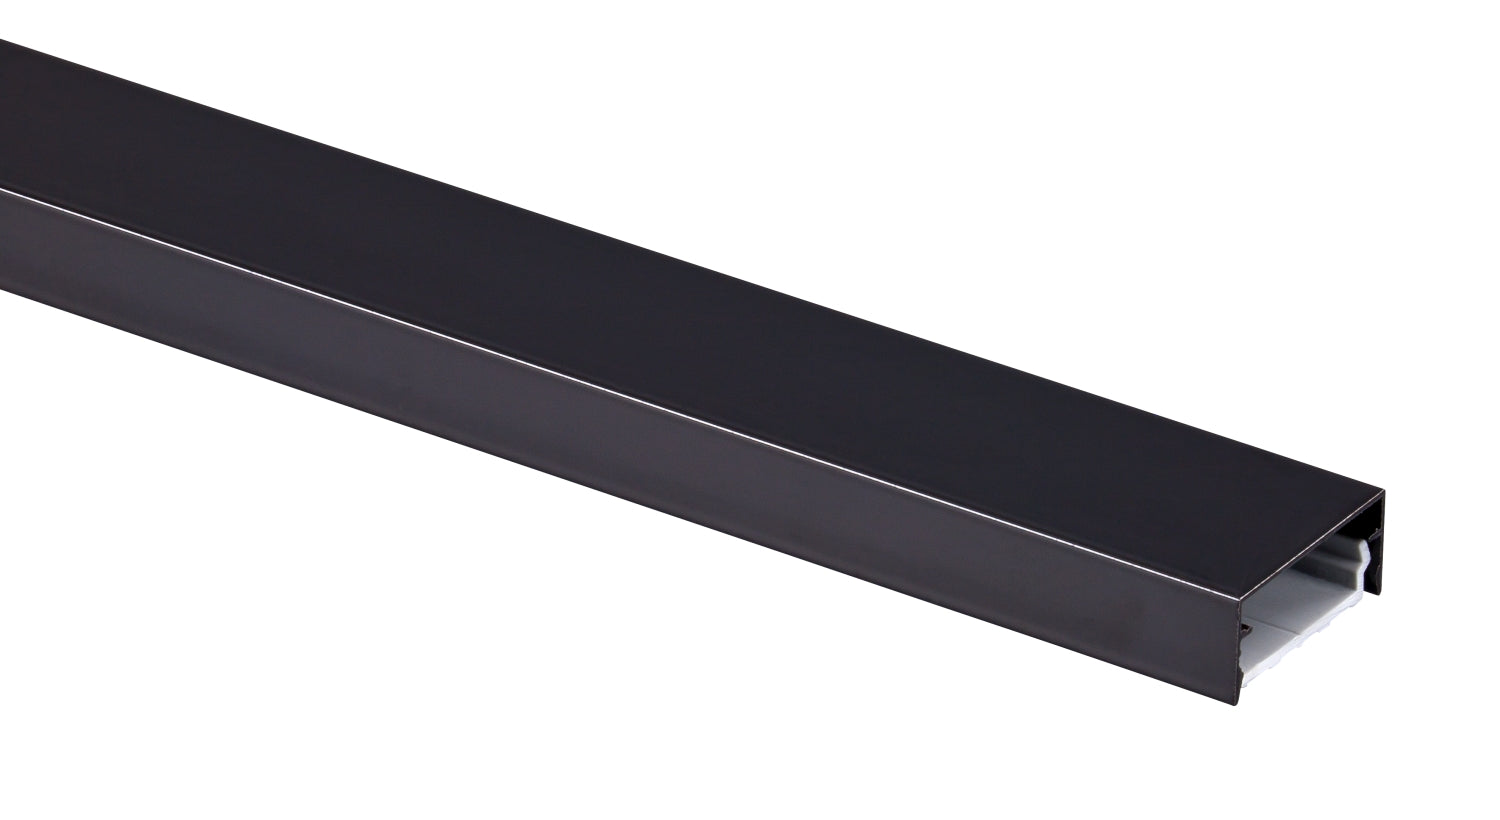 Alu Kabelkanal schwarz eckig 115x5 cm für TV HiFi Computer Lampen Aluminium Abdeckung